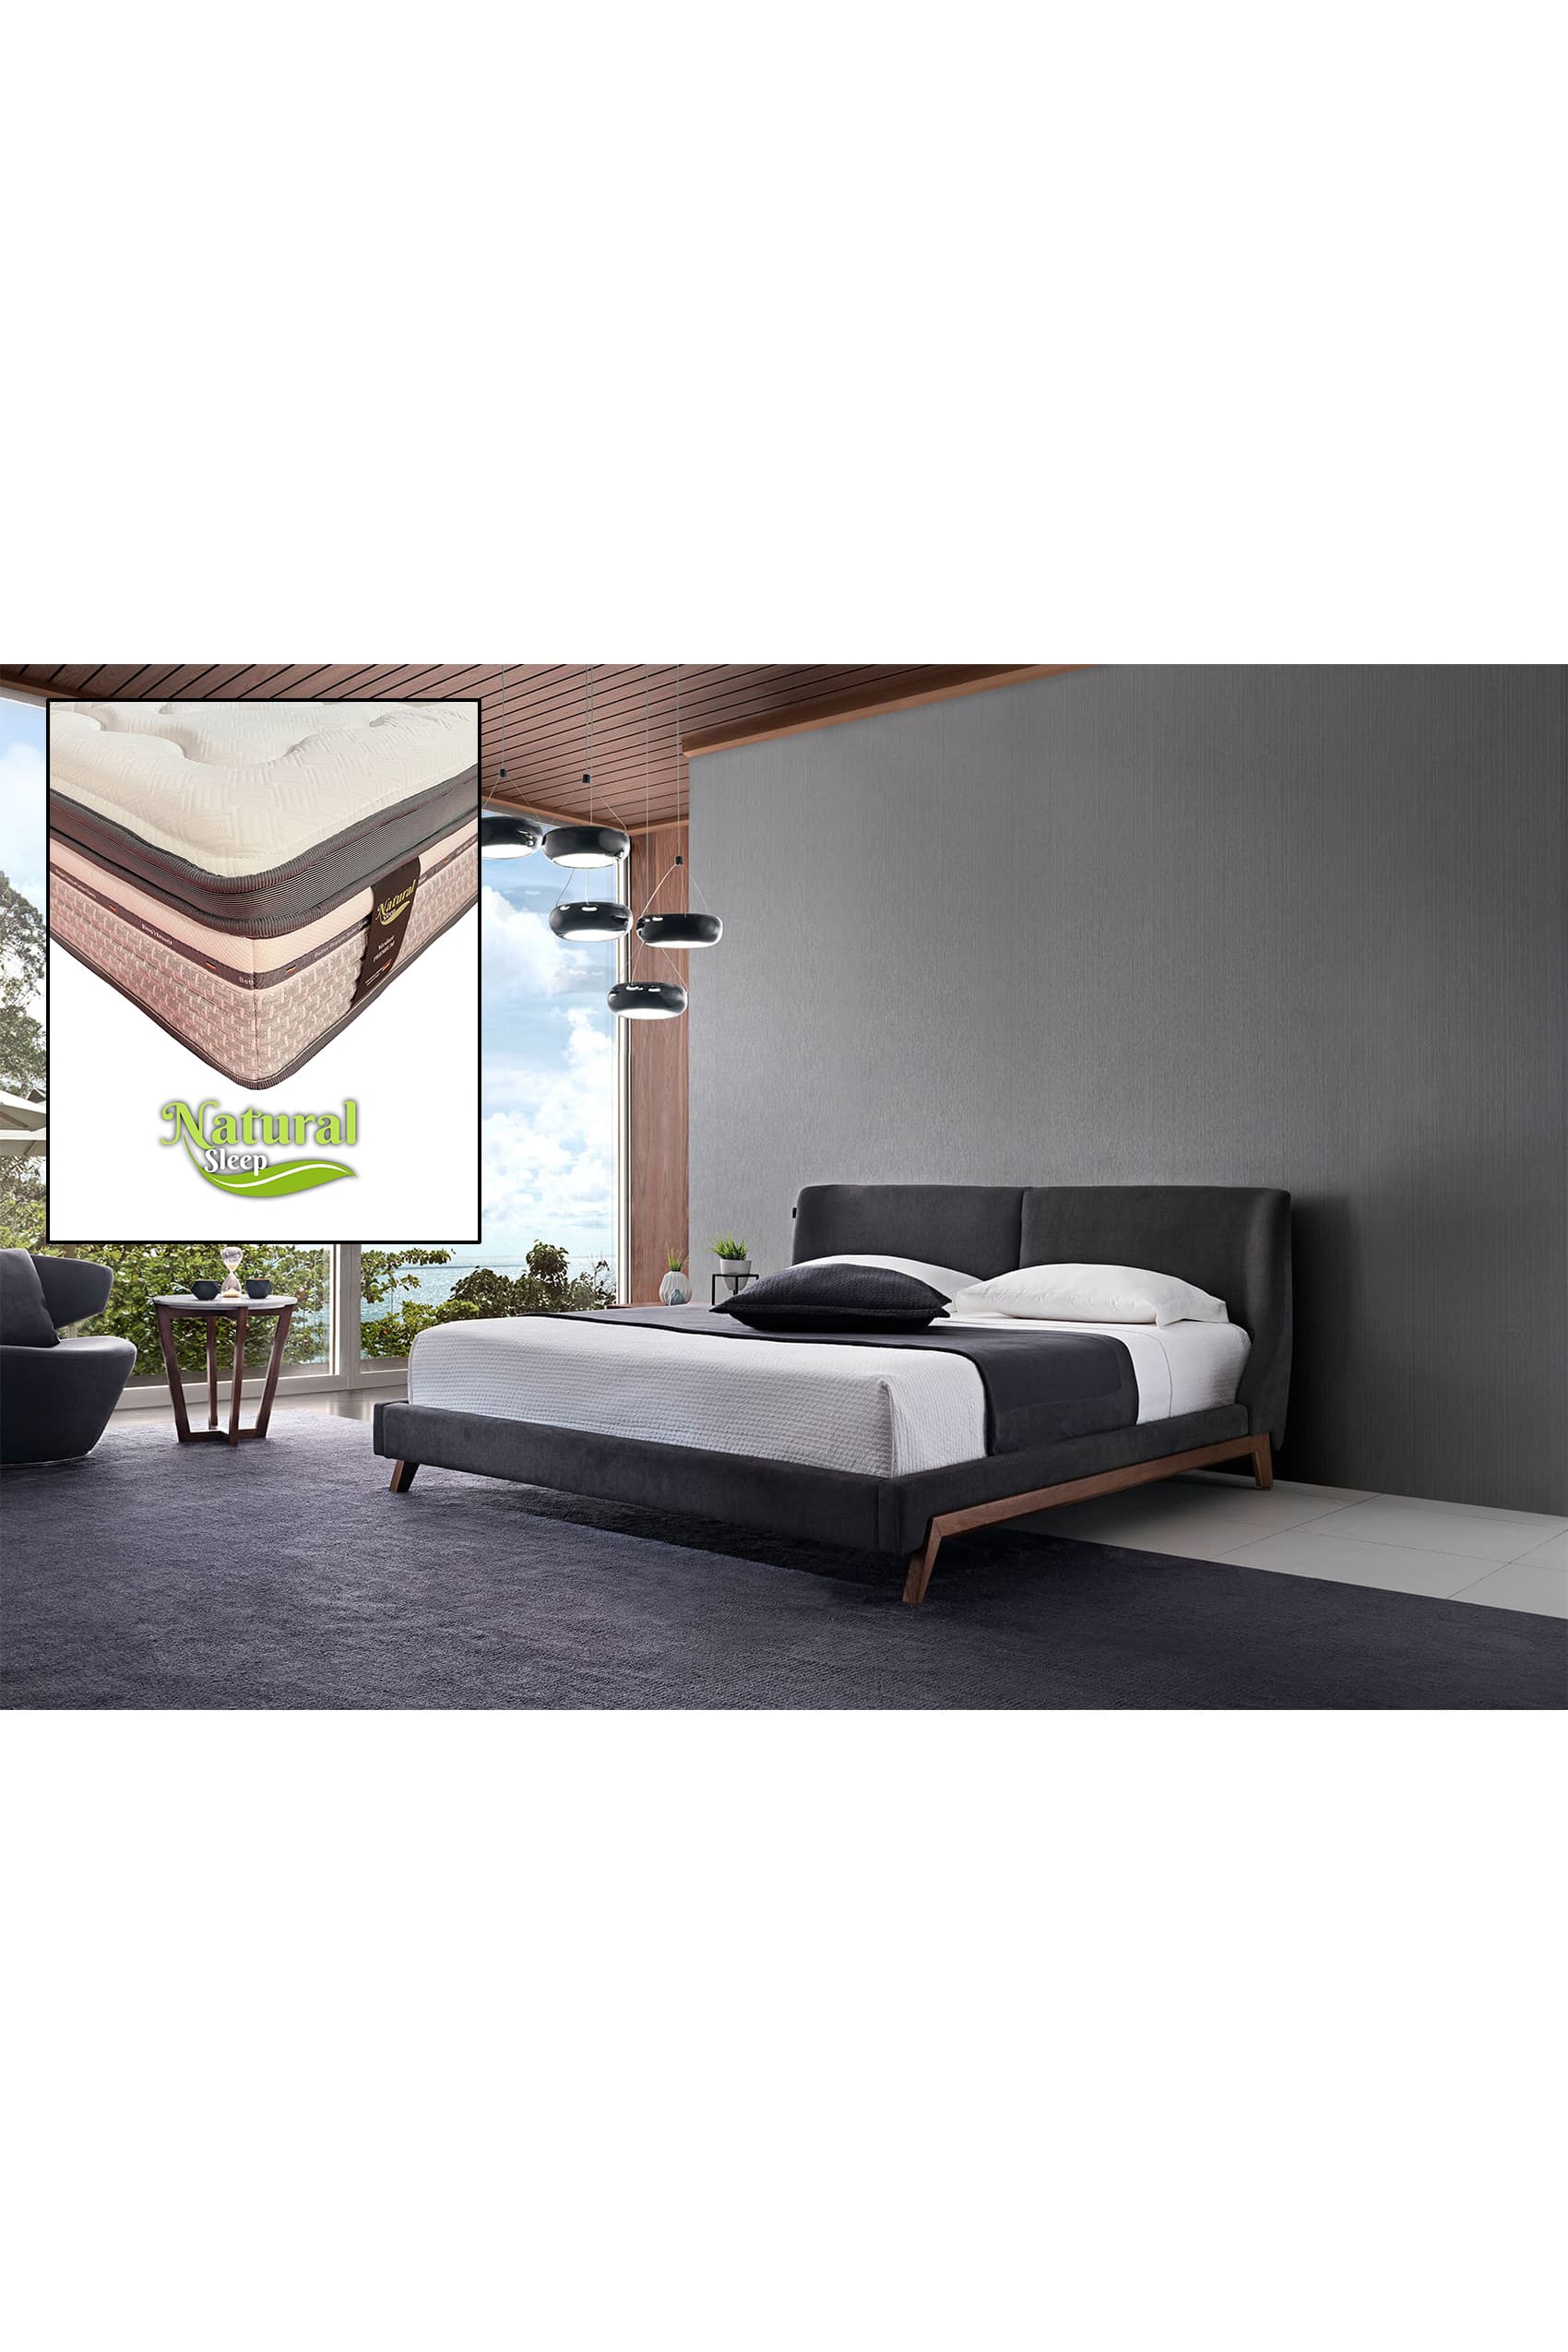 Sachi Designer Bed Frame + Natural Sleep Verdant